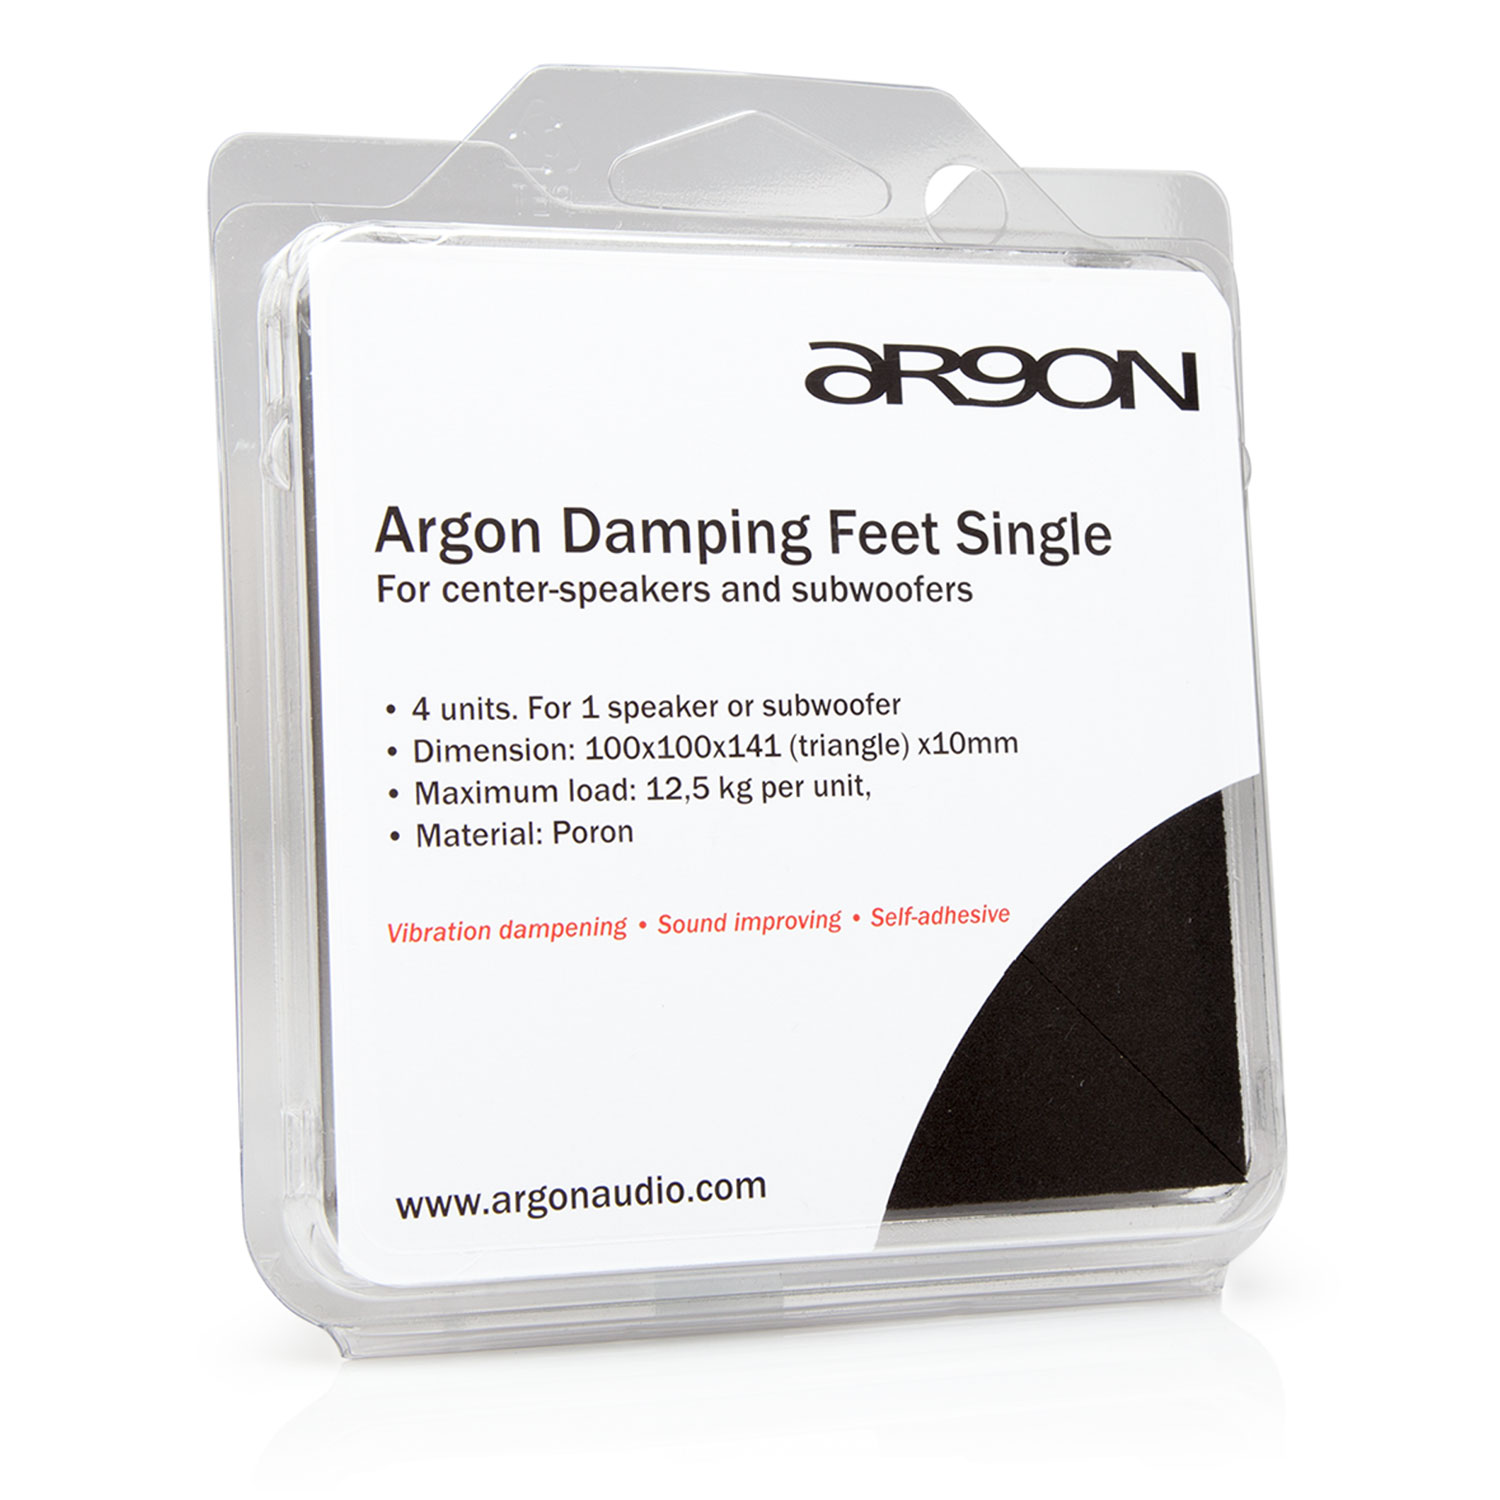 Argon Audio Audio Damping Feet Damping Feets von Argon Audio